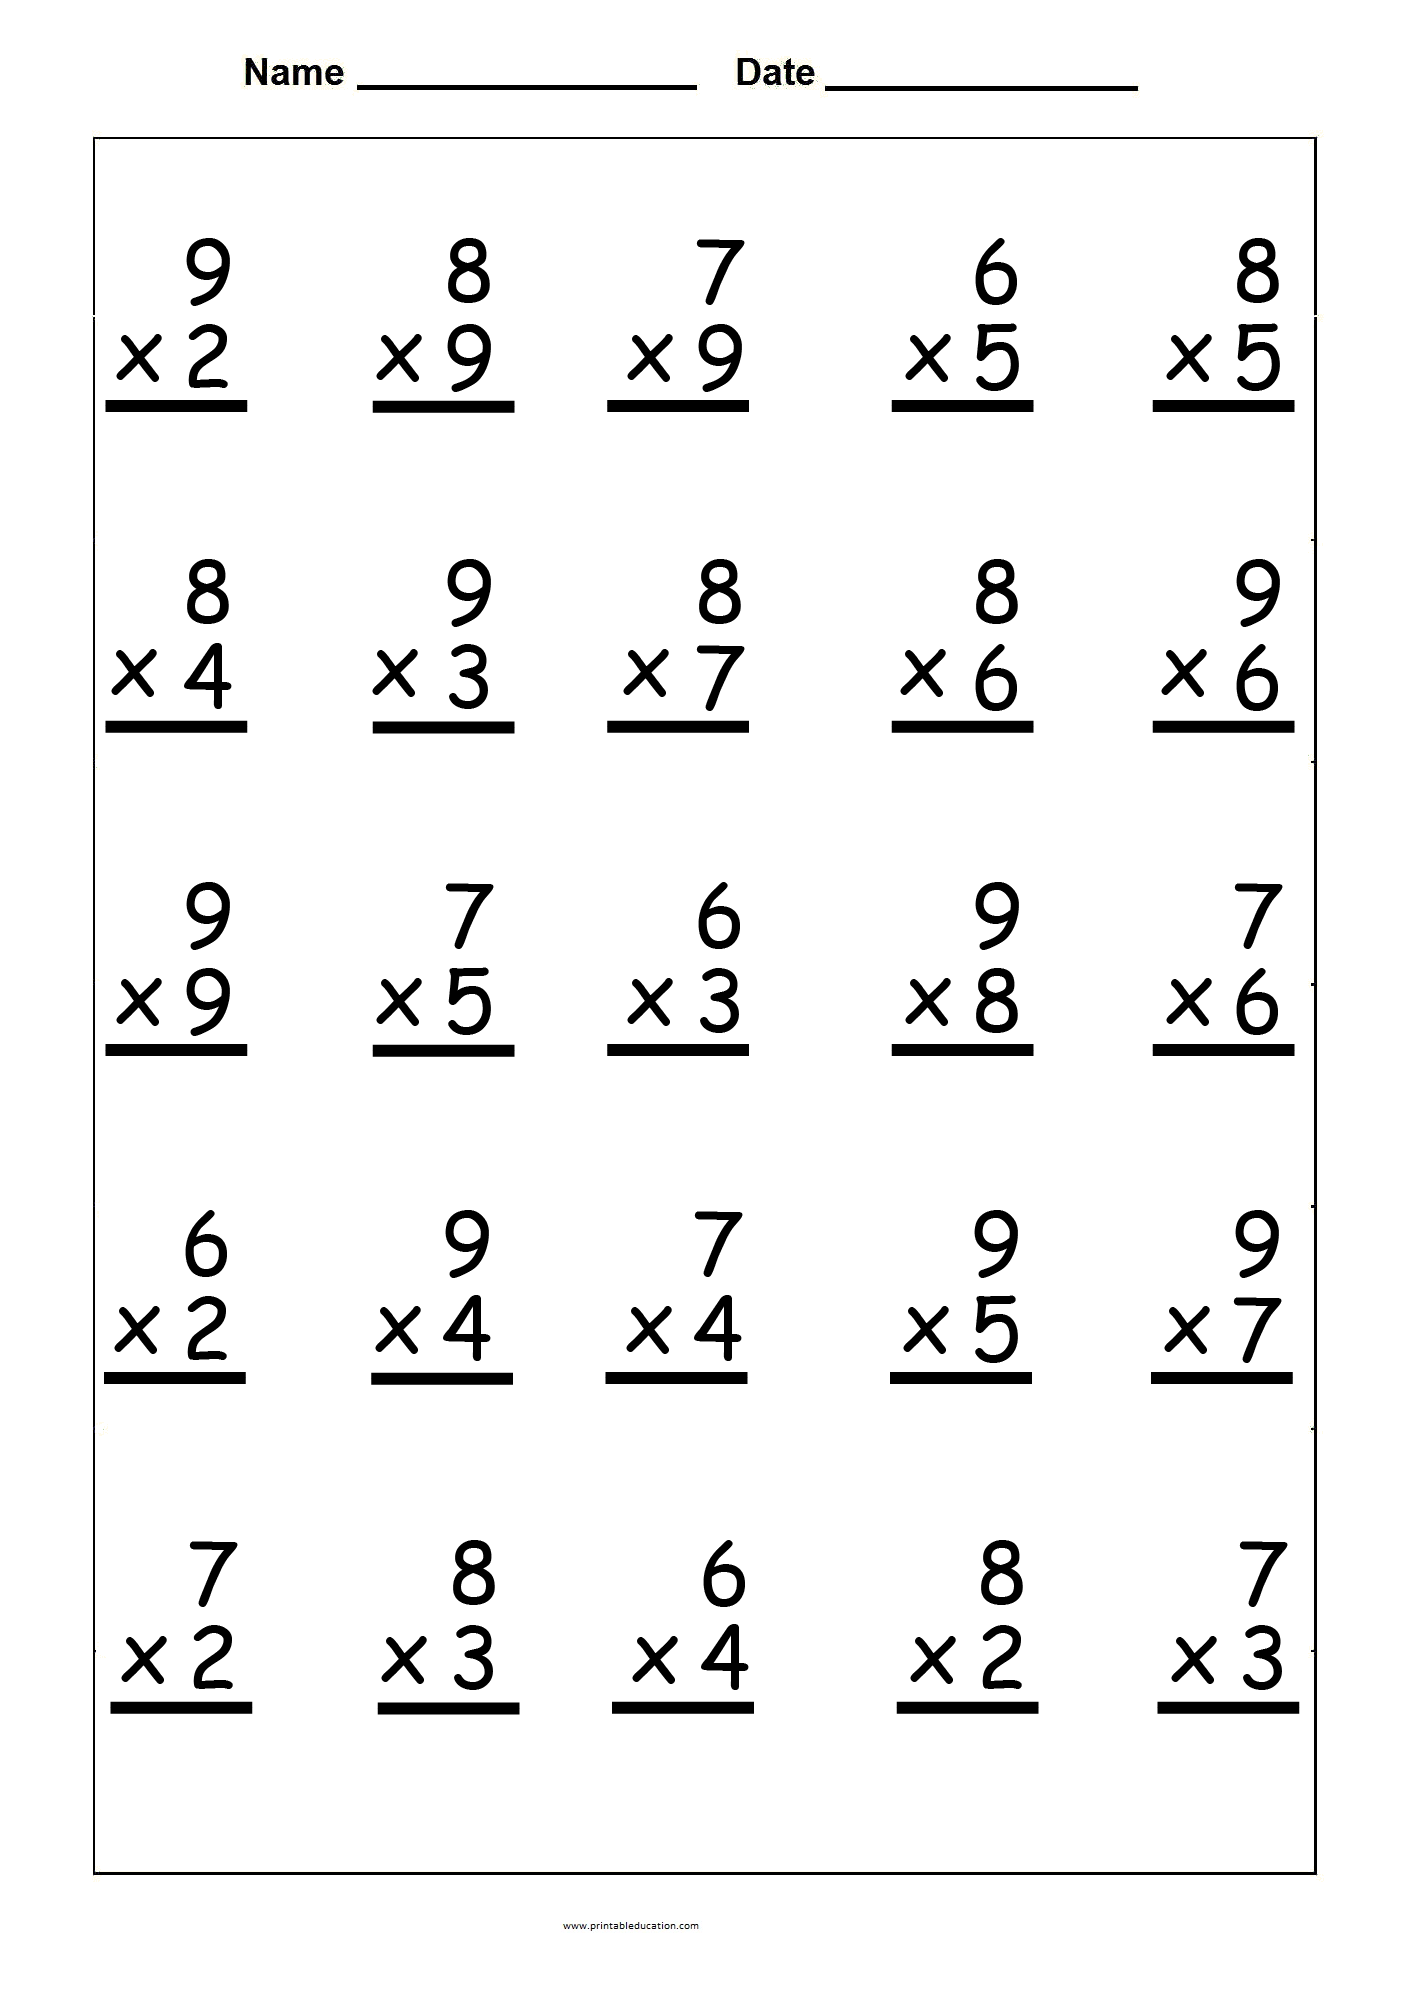 25 Math Multiplication Worksheets Free PrintablEducation